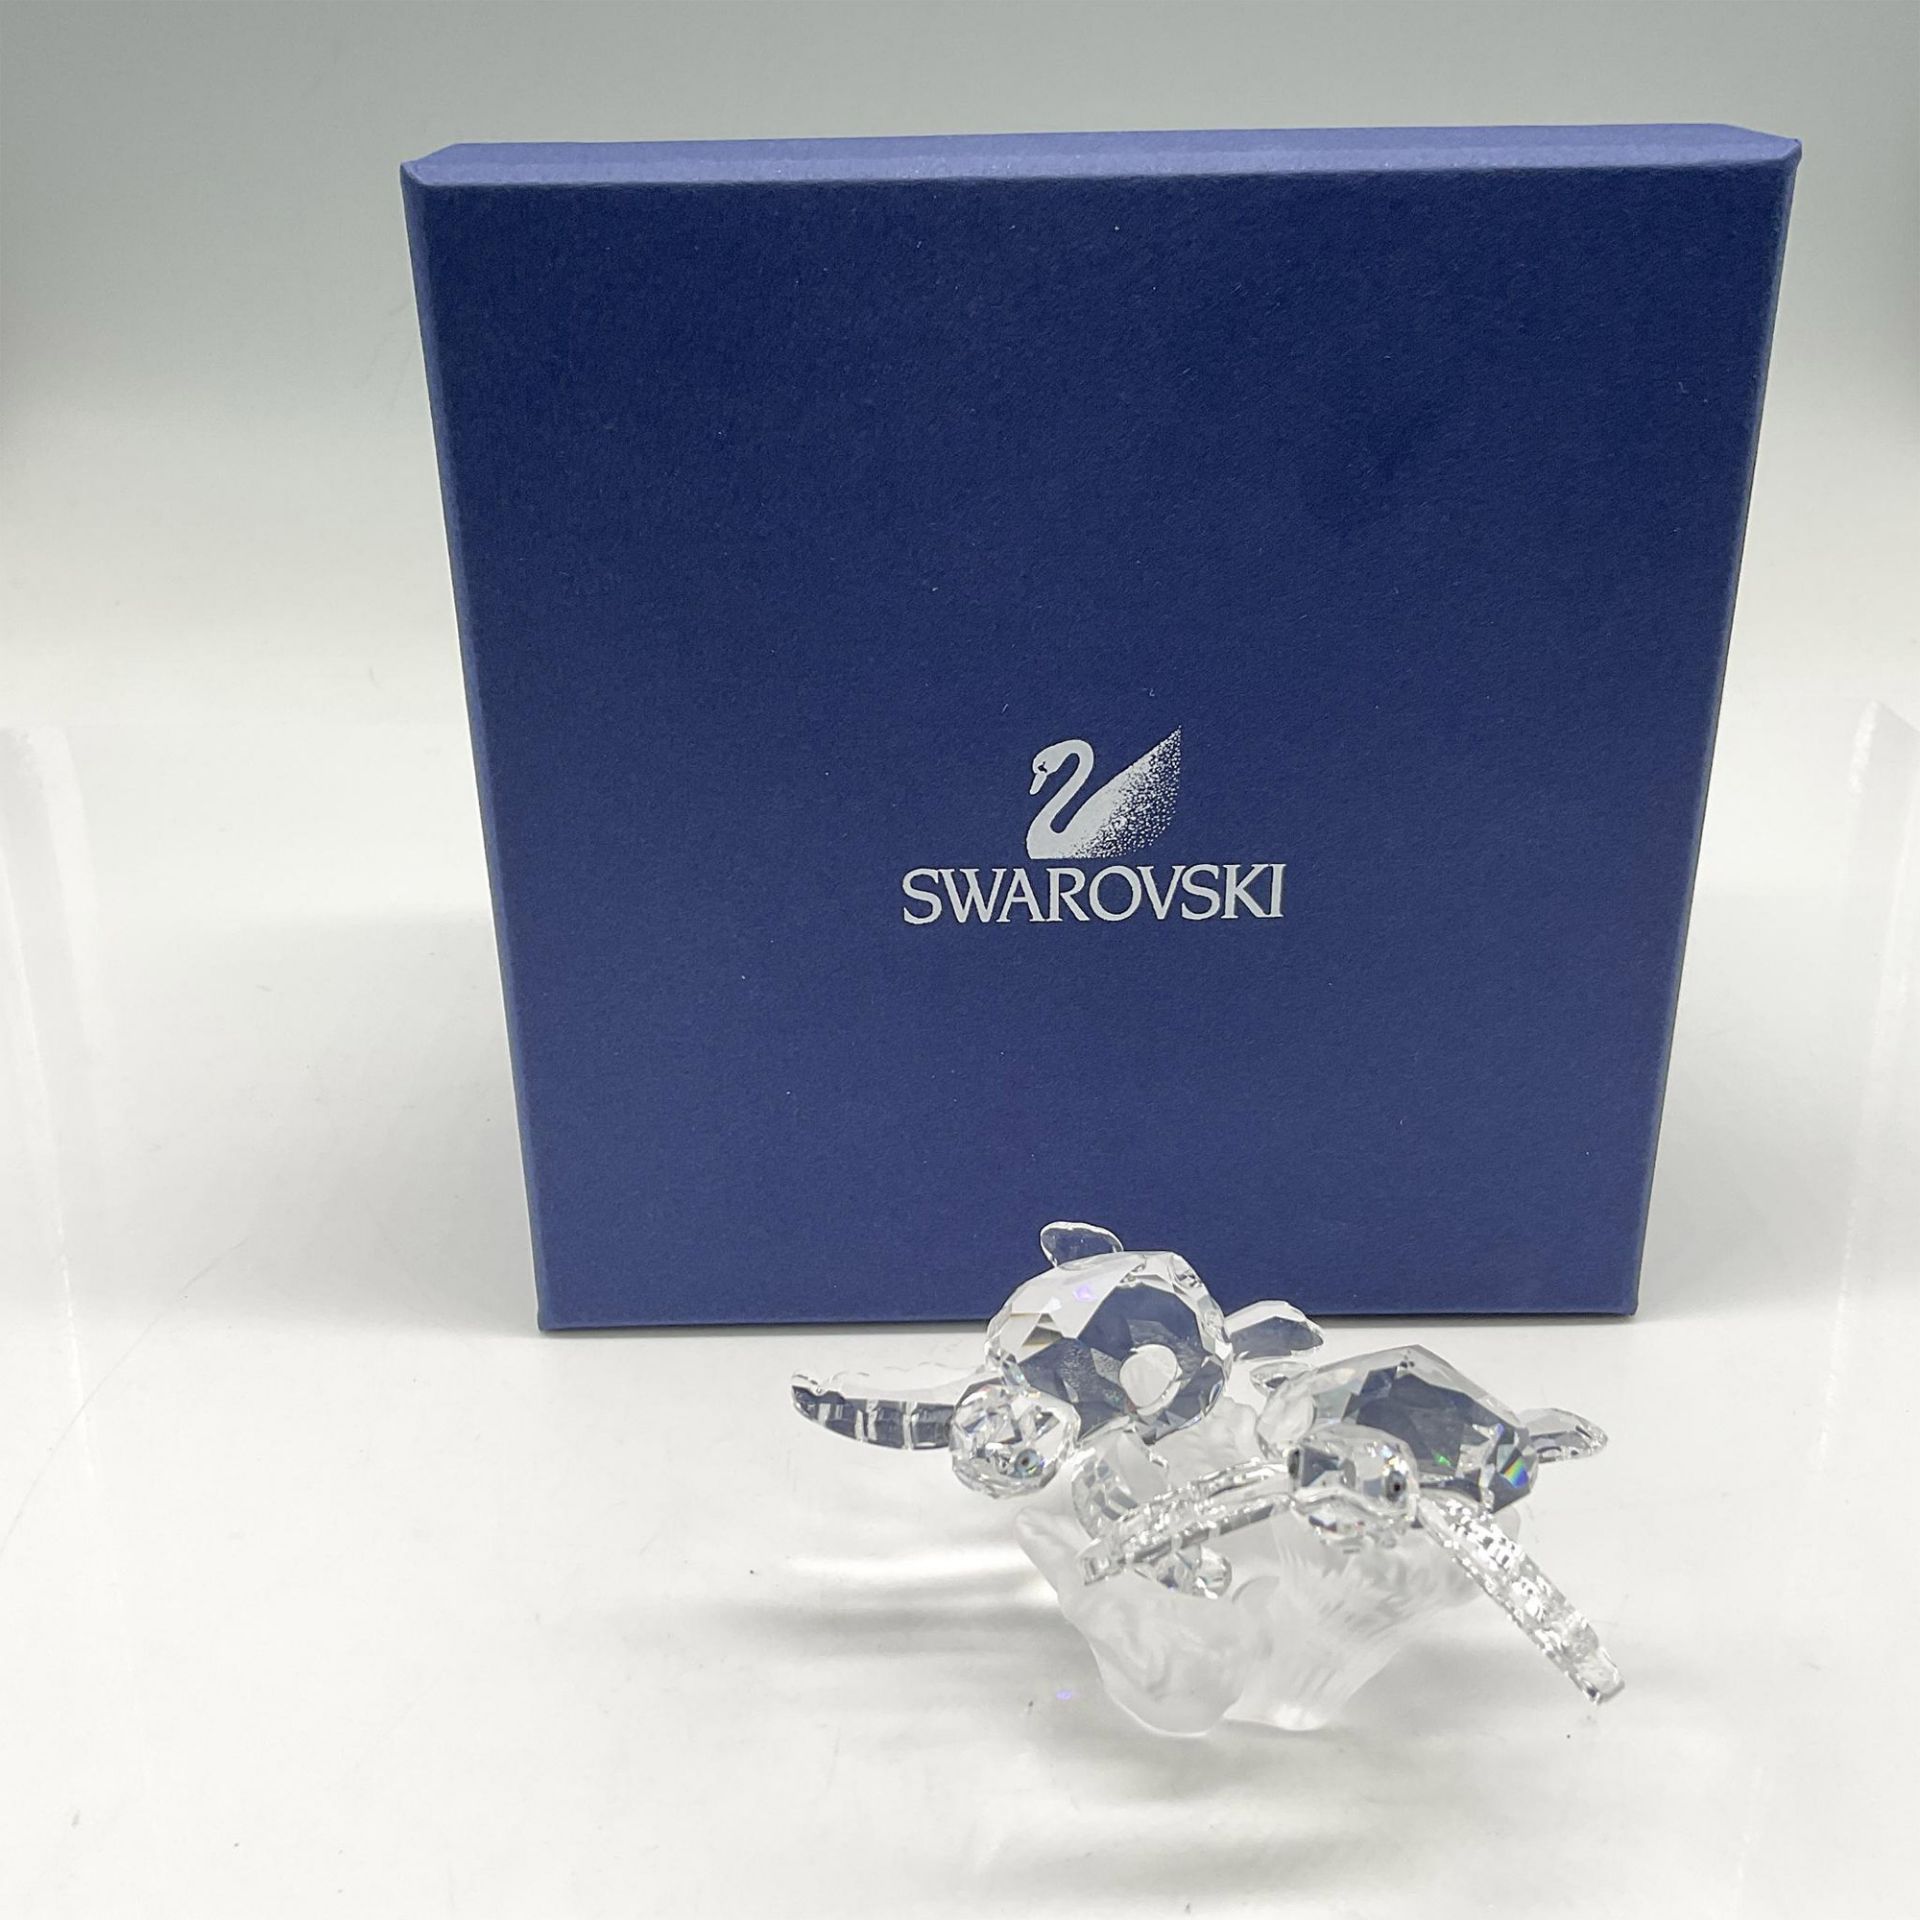 Swarovski Silver Crystal Figurine, Baby Sea Turtles - Image 4 of 4